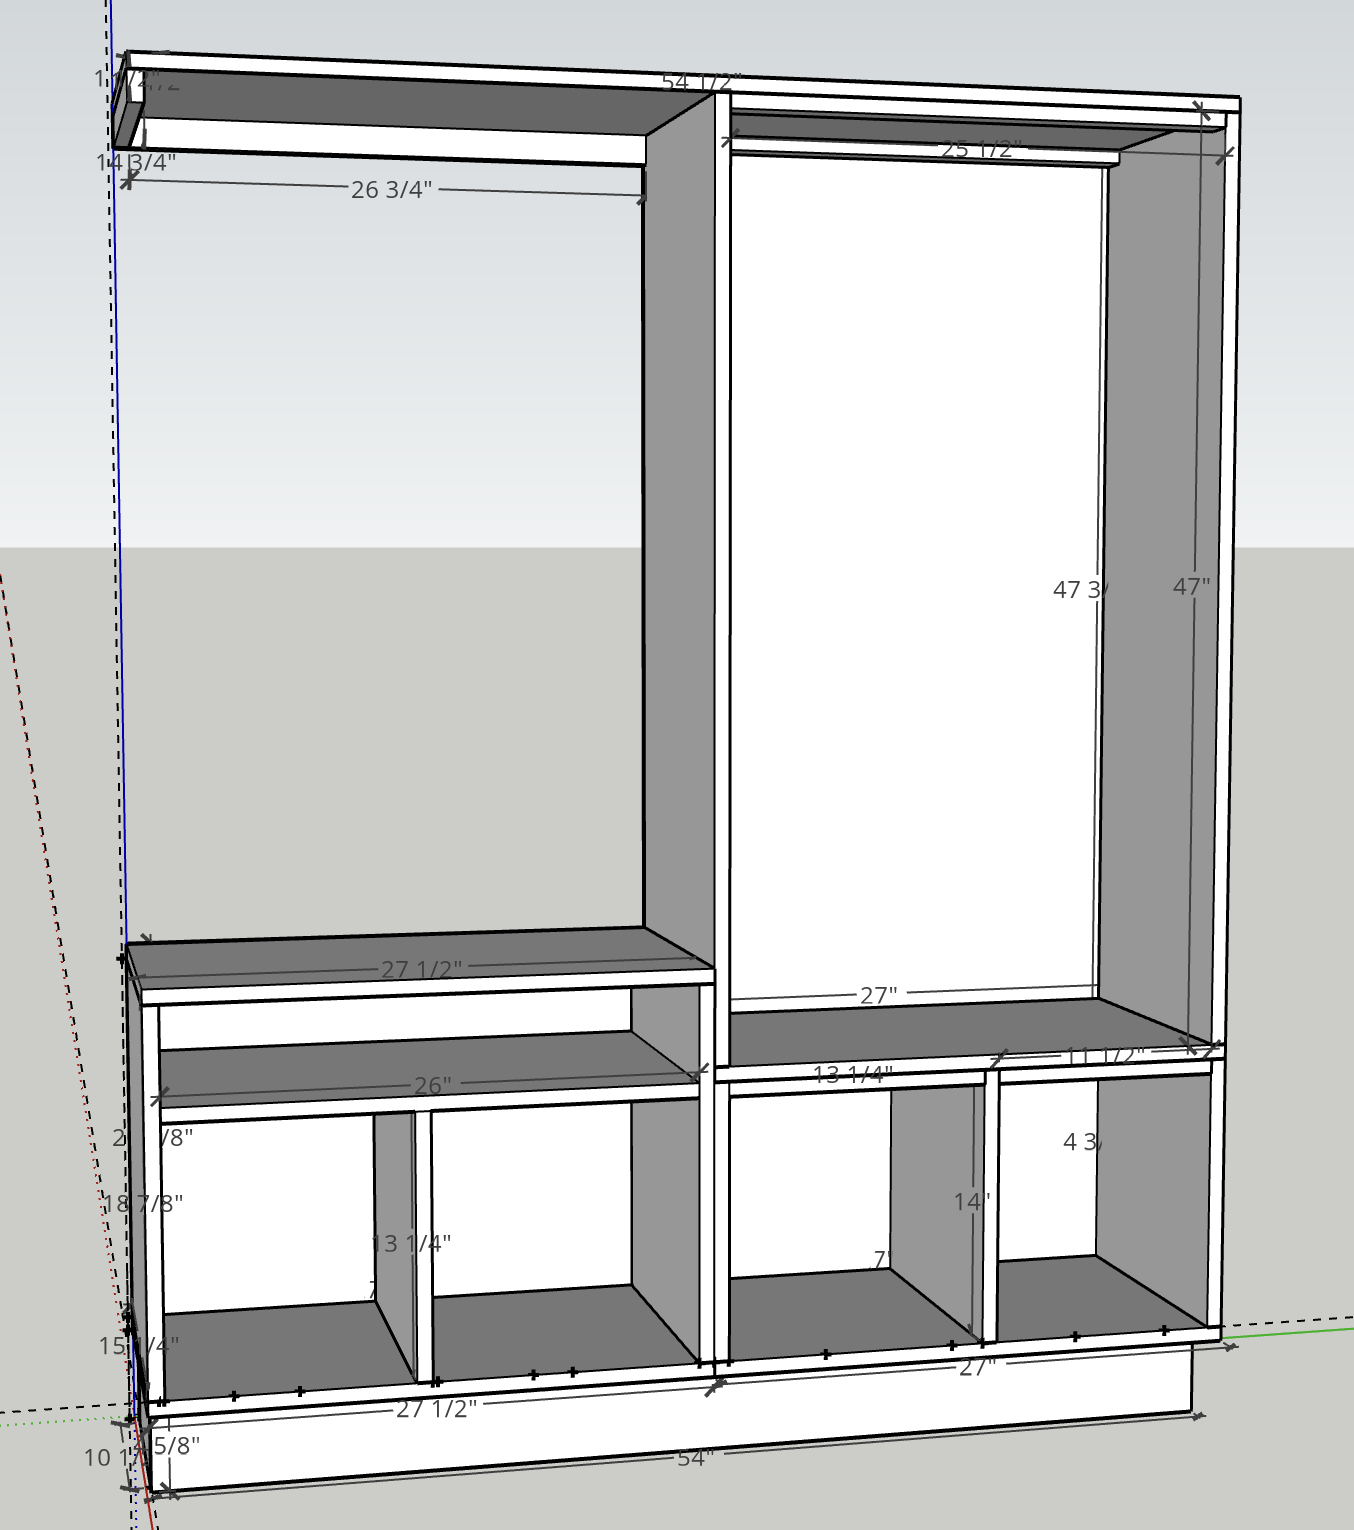 KItchen Closet design in SketchUp software